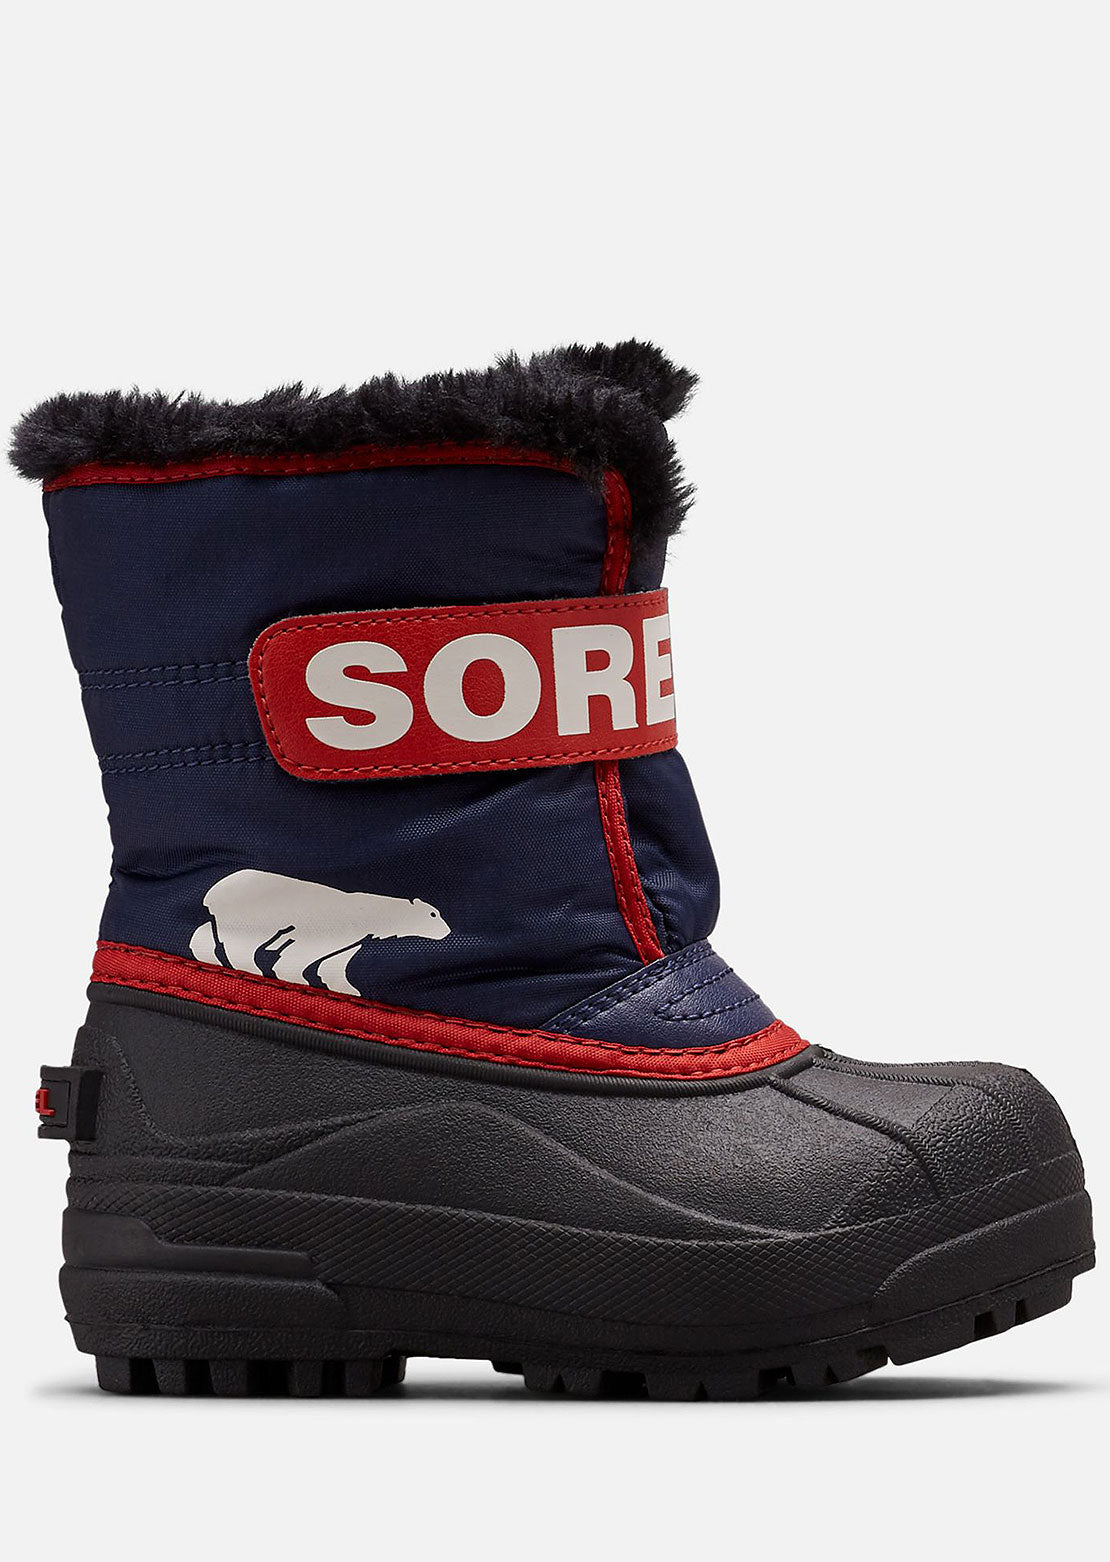 Sorel Infant Snow Commander Boots Nocturnal/Sail Red